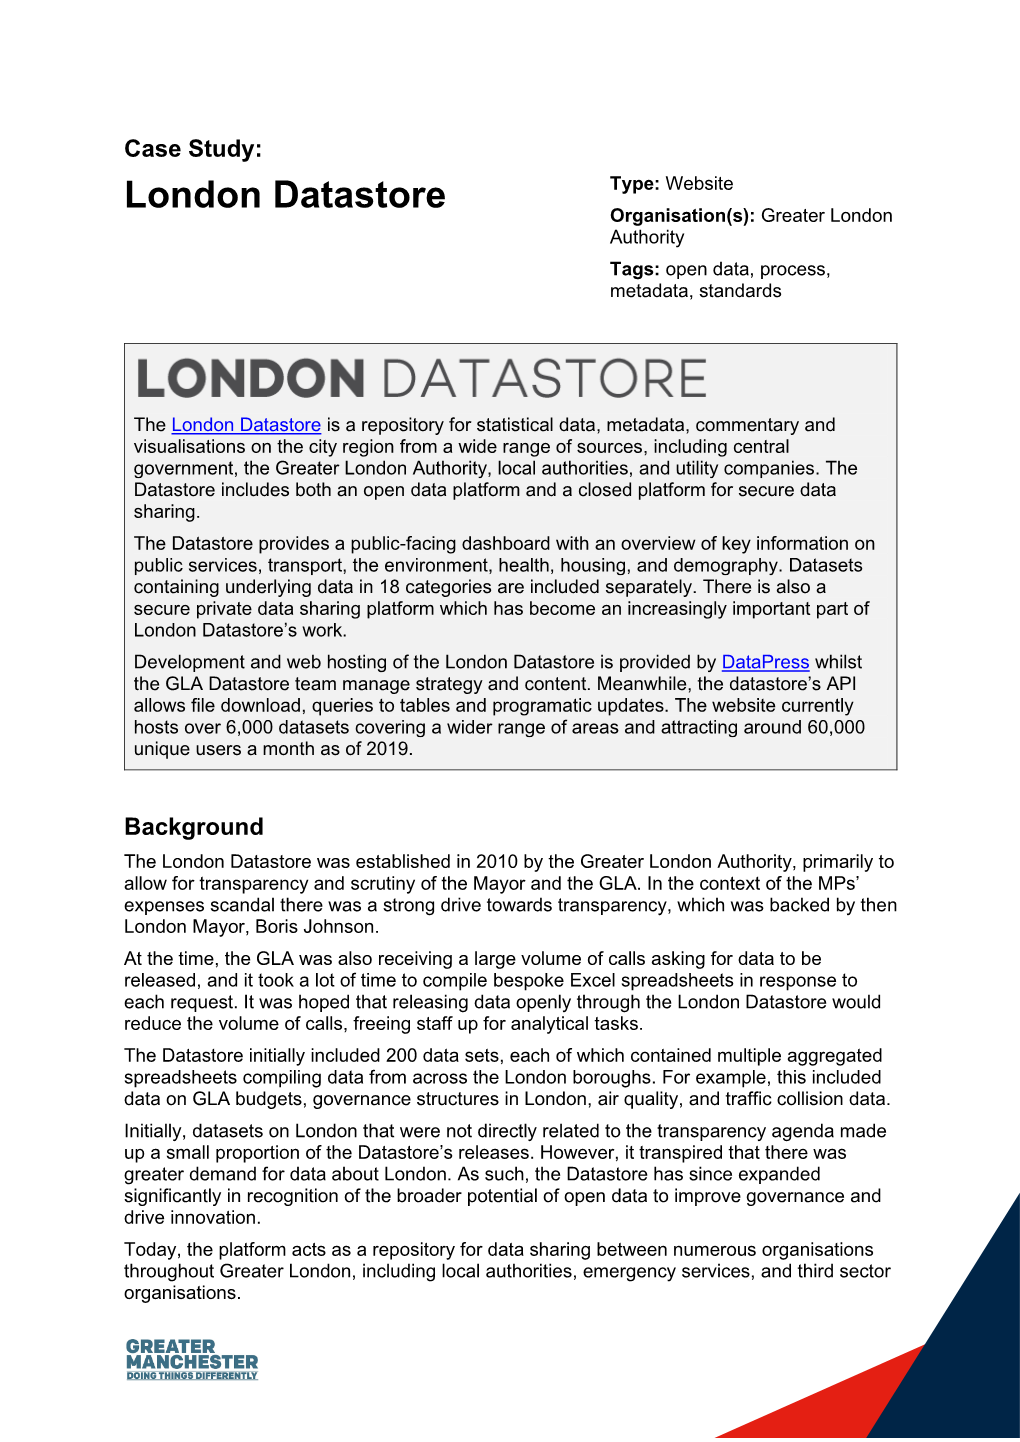 London Datastore Type: Website Organisation(S): Greater London Authority Tags: Open Data, Process, Metadata, Standards